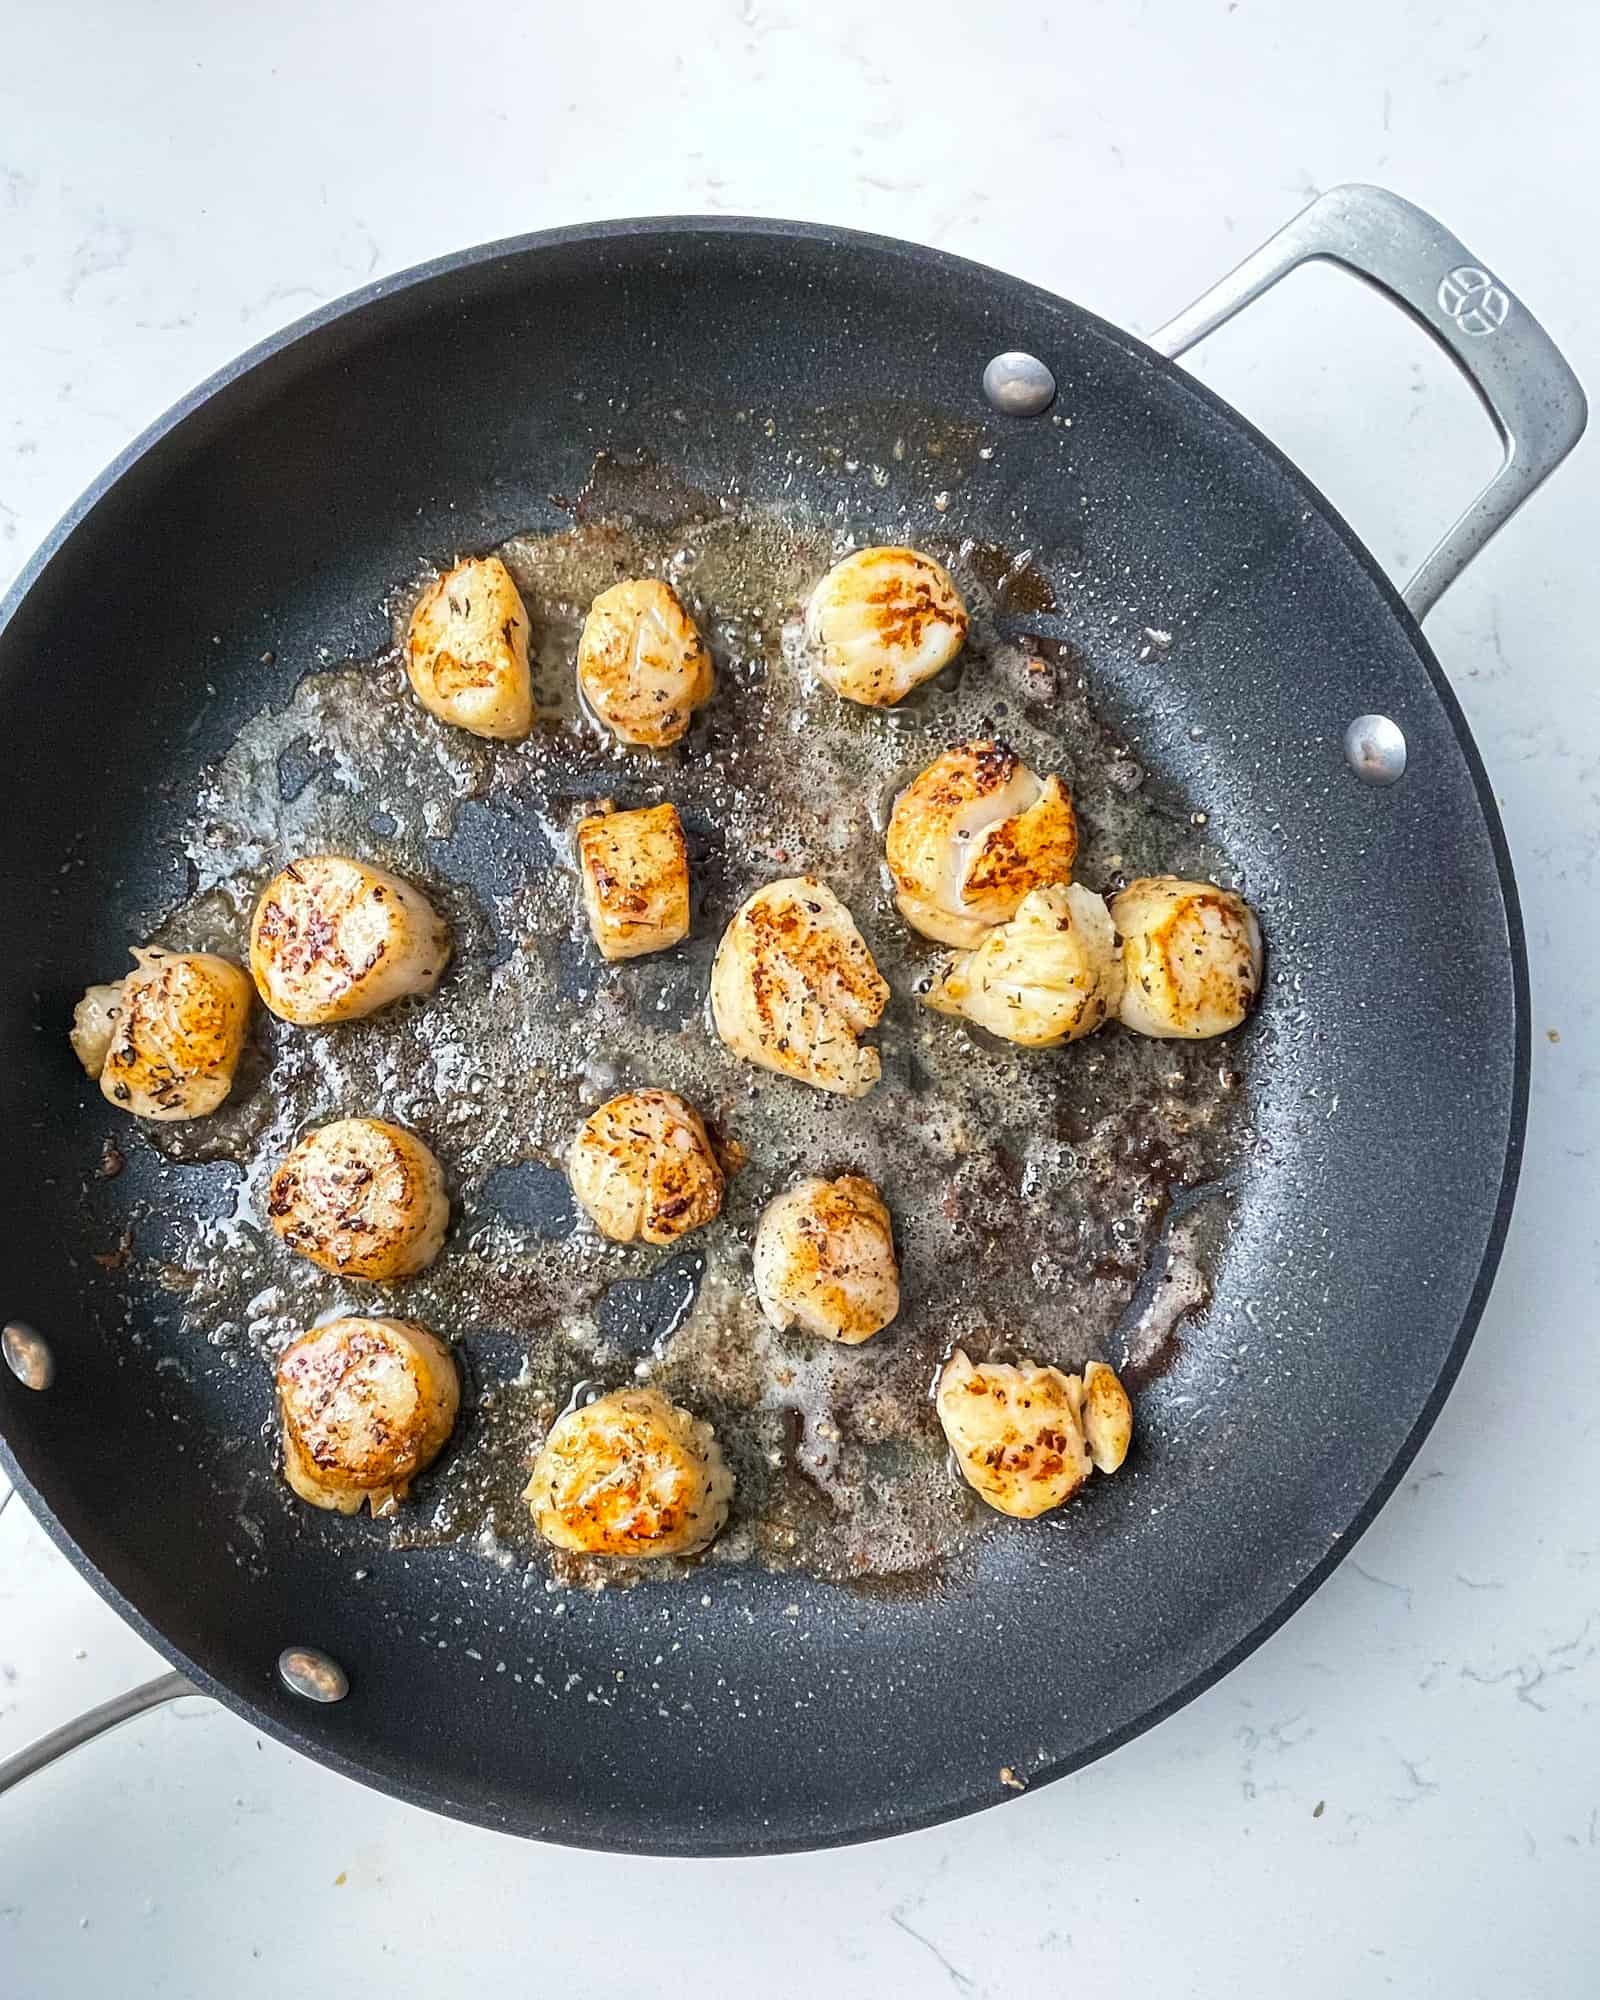 seared scallops in a frying pan.